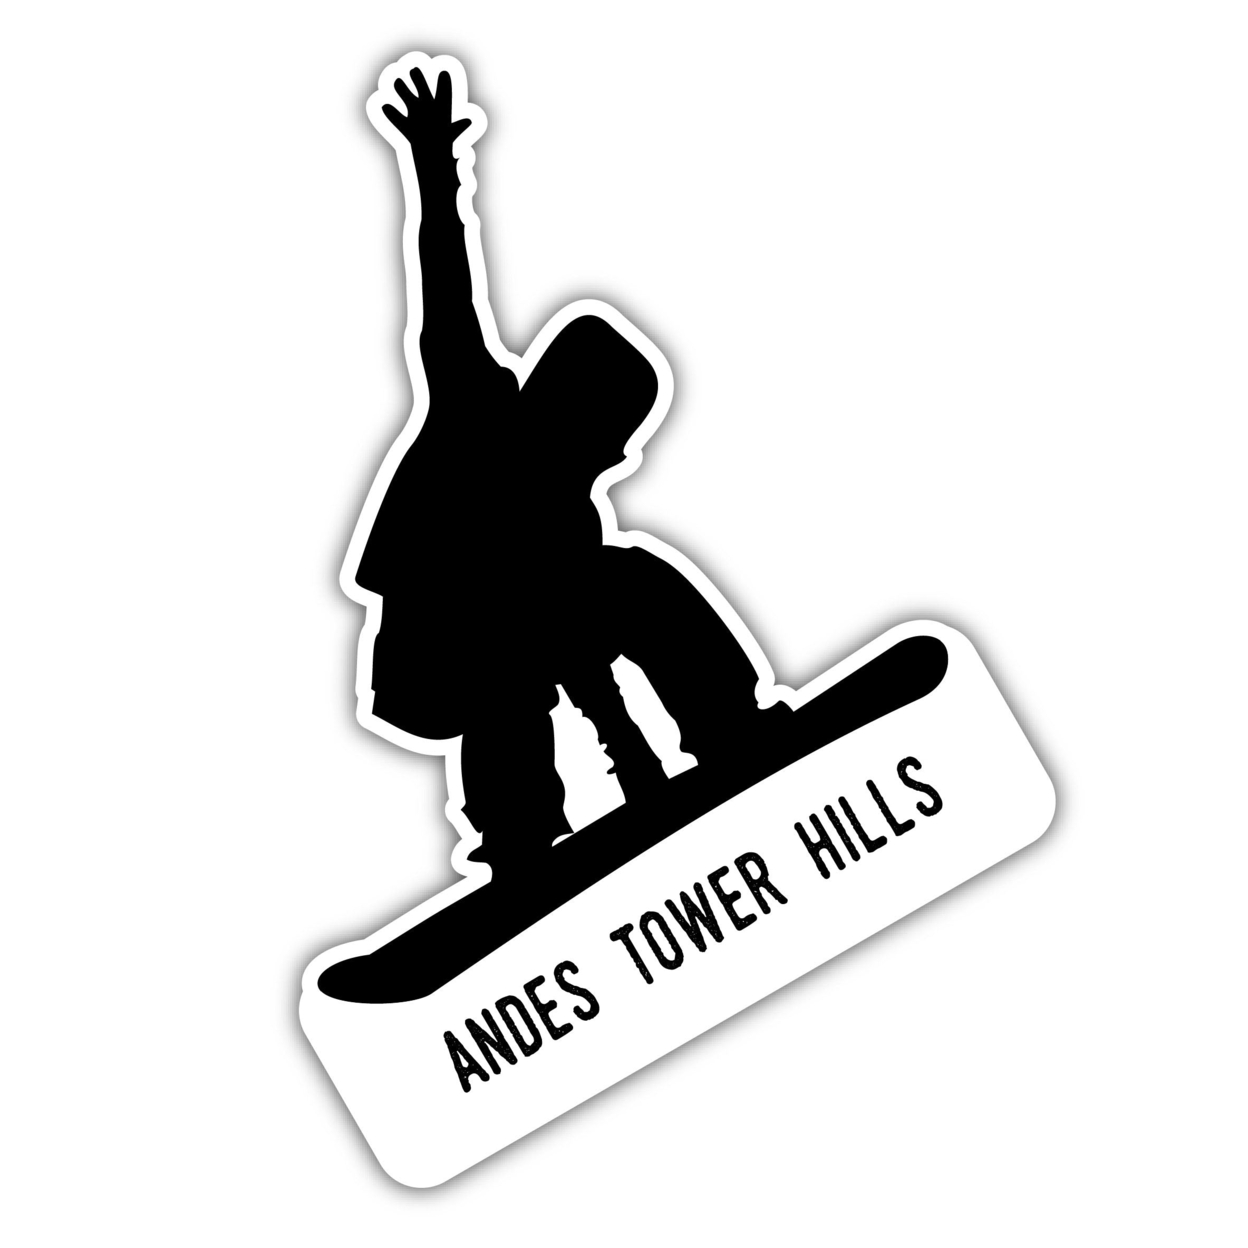 Andes Tower Hills Minnesota Ski Adventures Souvenir 4 Inch Vinyl Decal Sticker Board Design